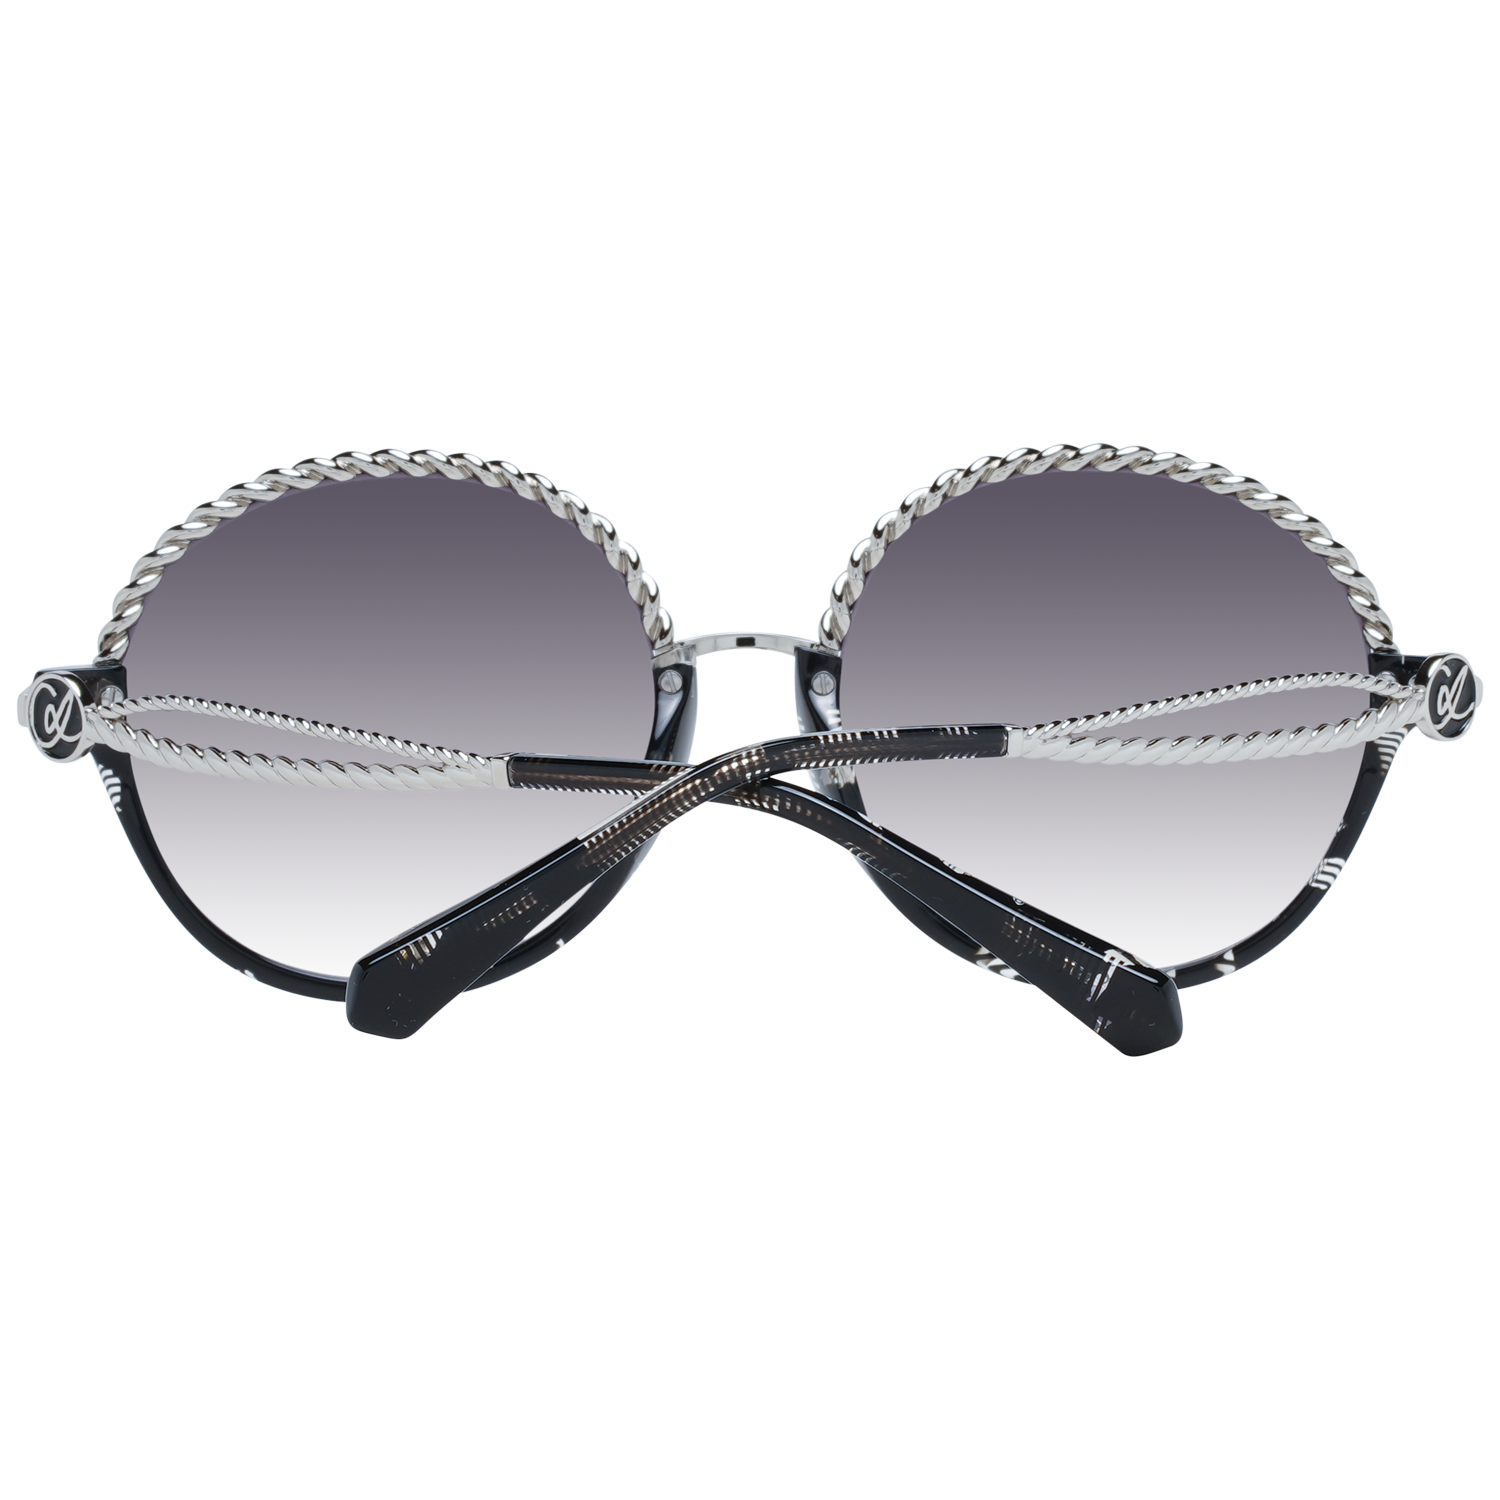 Christian Lacroix Sunglasses Christian Lacroix Sunglasses CL5098 41 54 Eyeglasses Eyewear UK USA Australia 